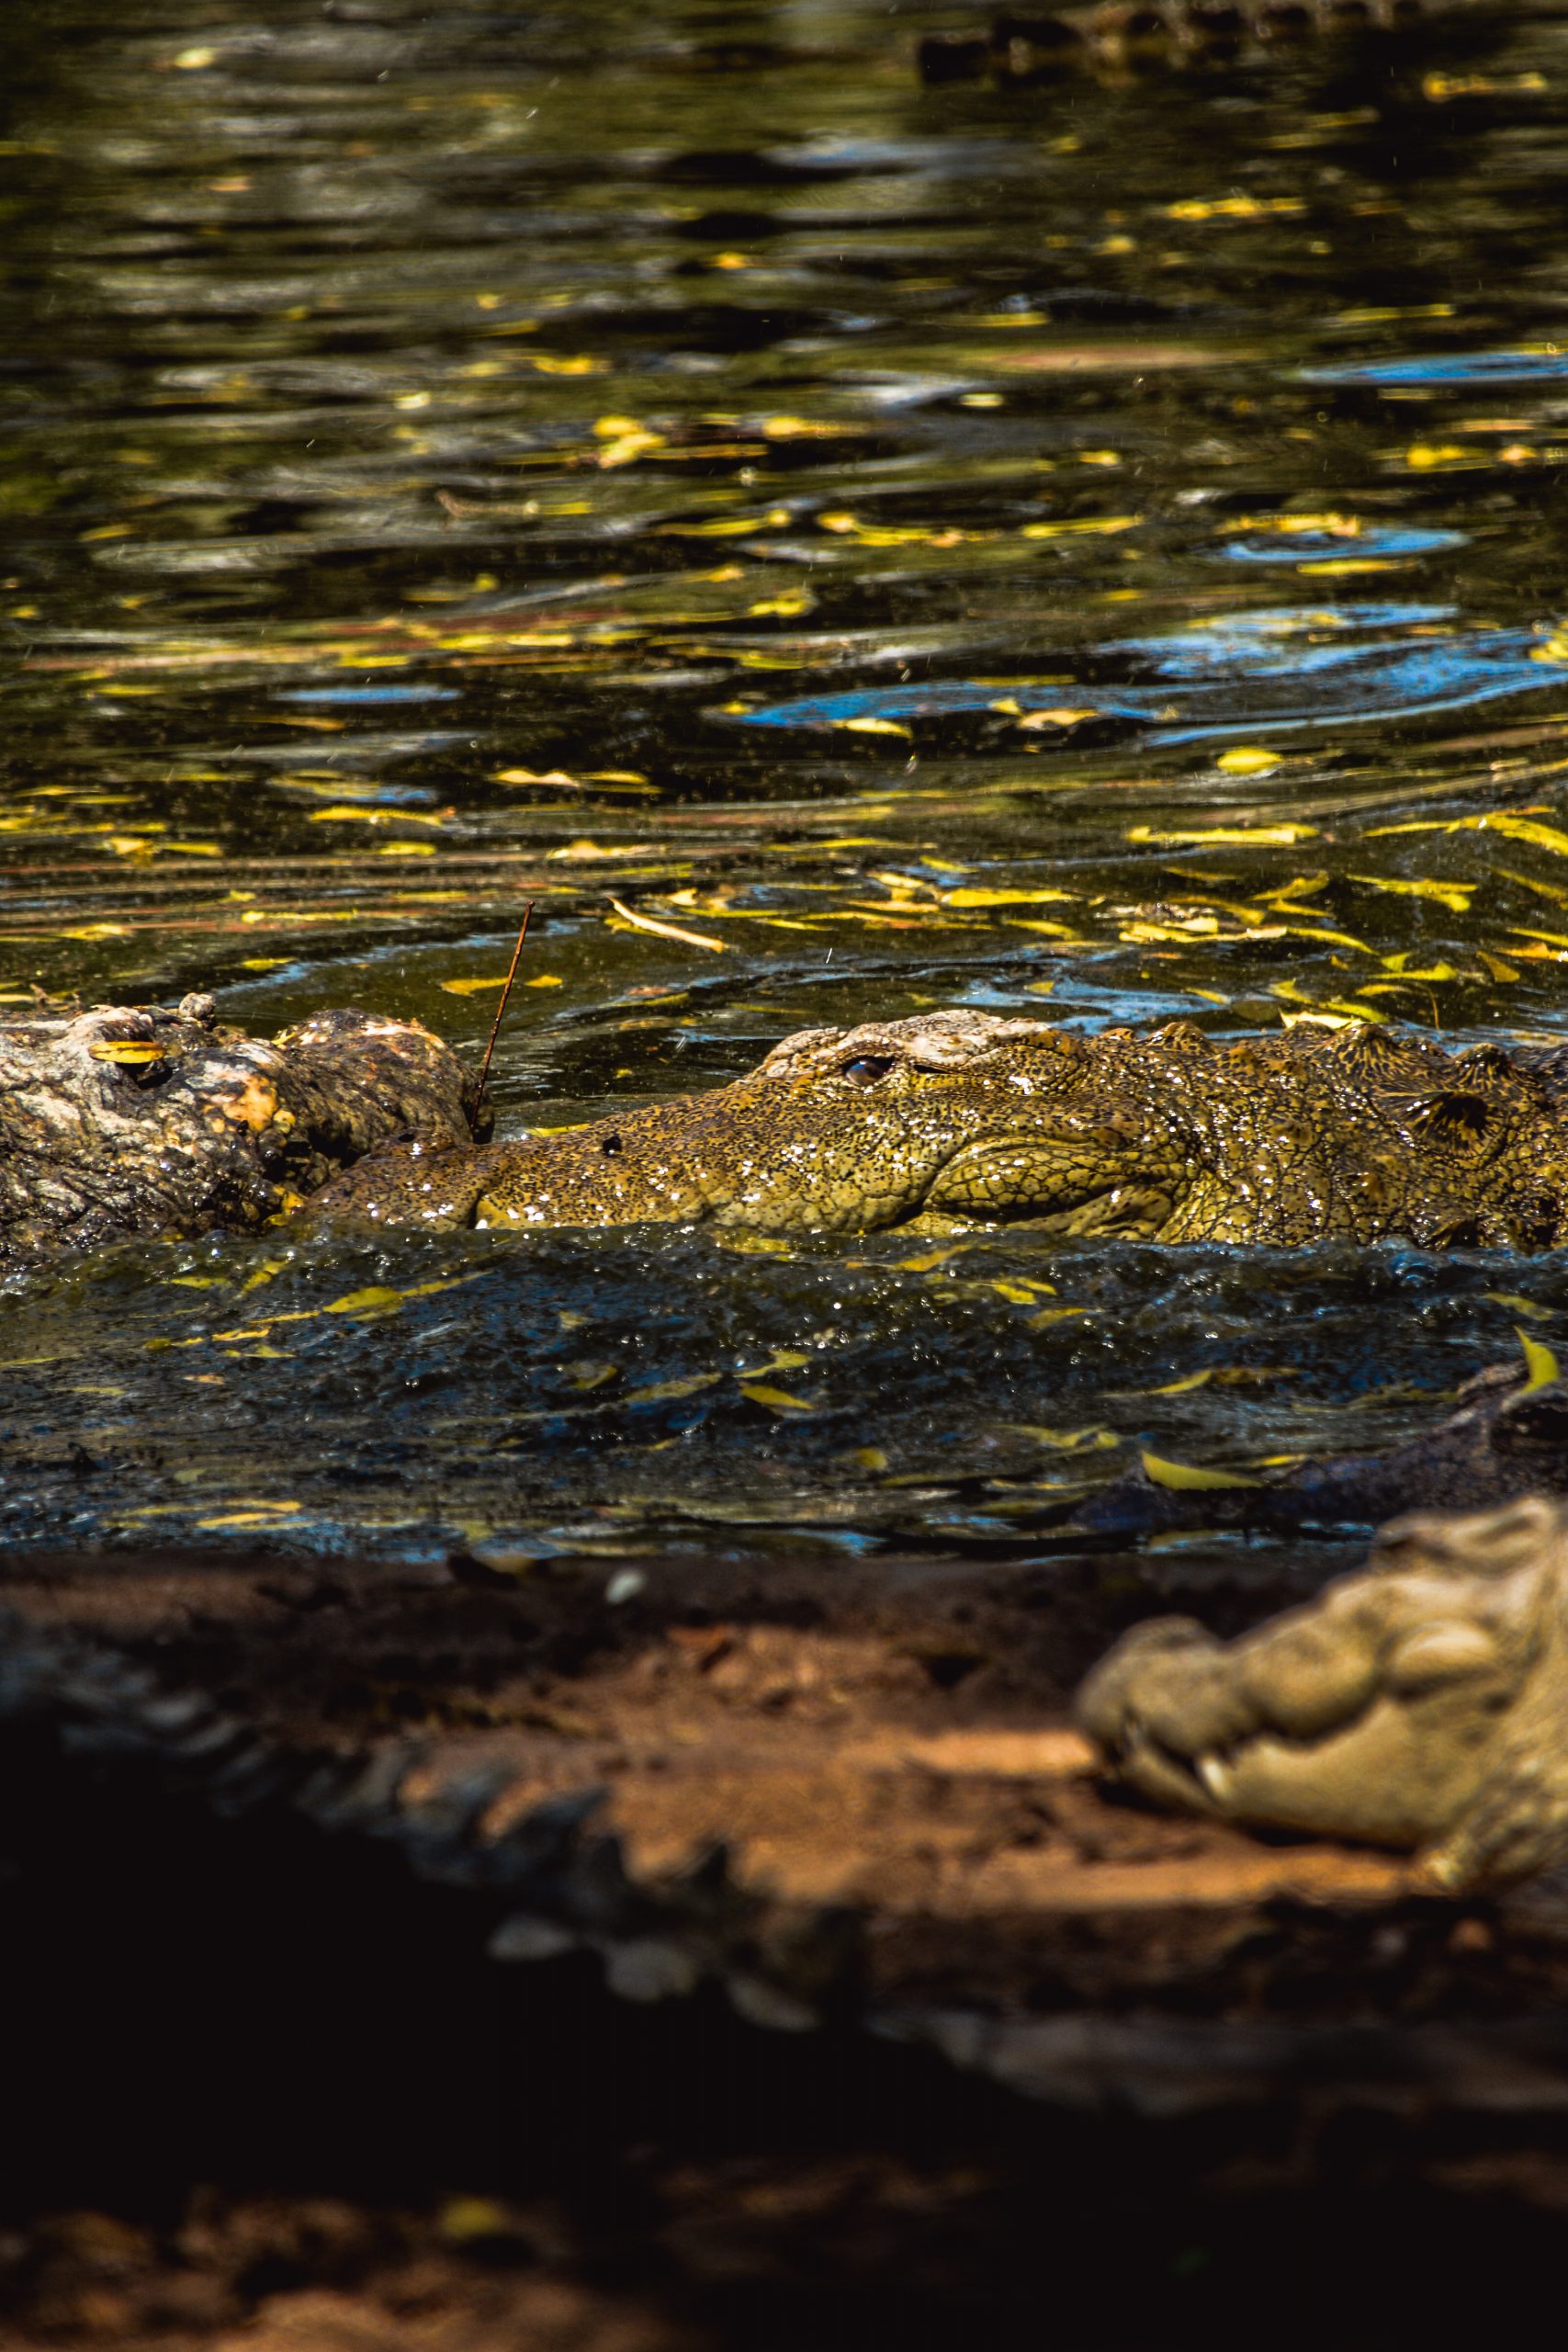 An alligator in water